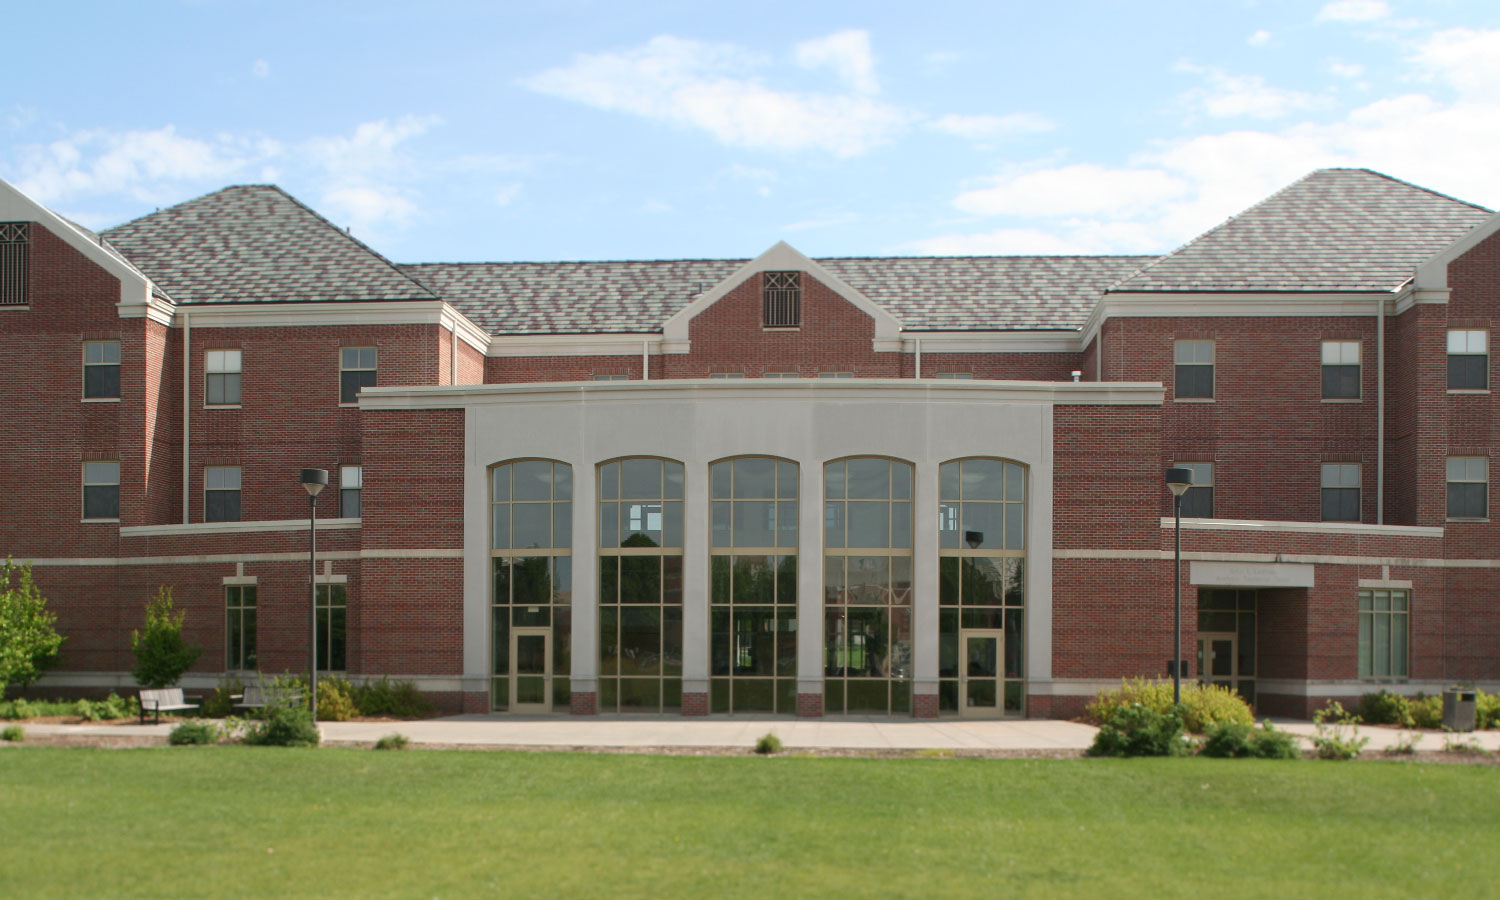 Kaufman Academic Residential Center